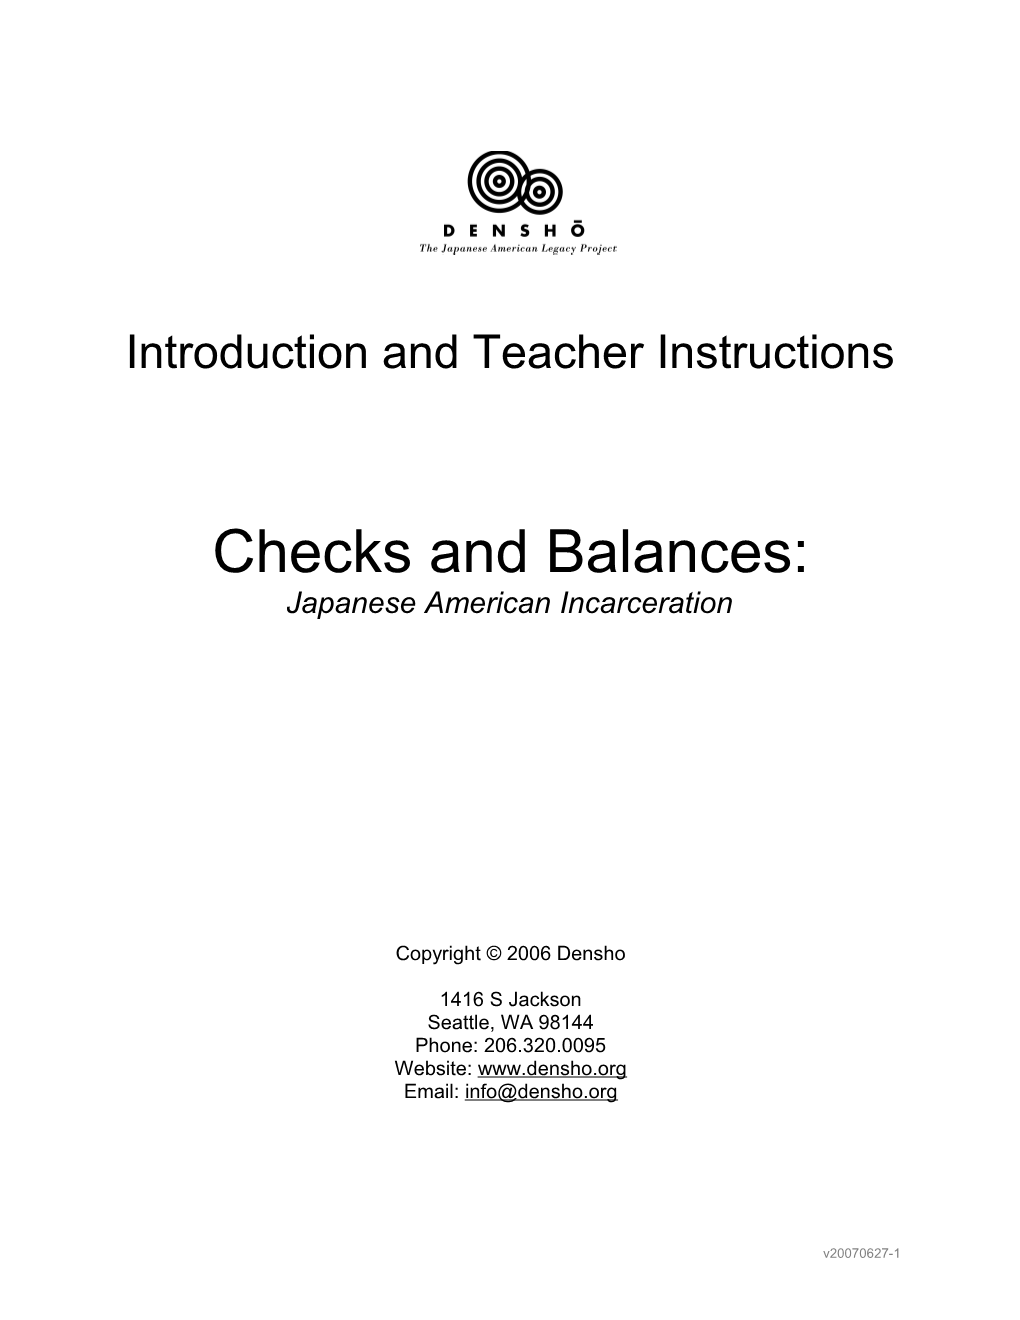 Densho Civil Liberties Curriculum - Checks and Balances: Japanese American Incarceration